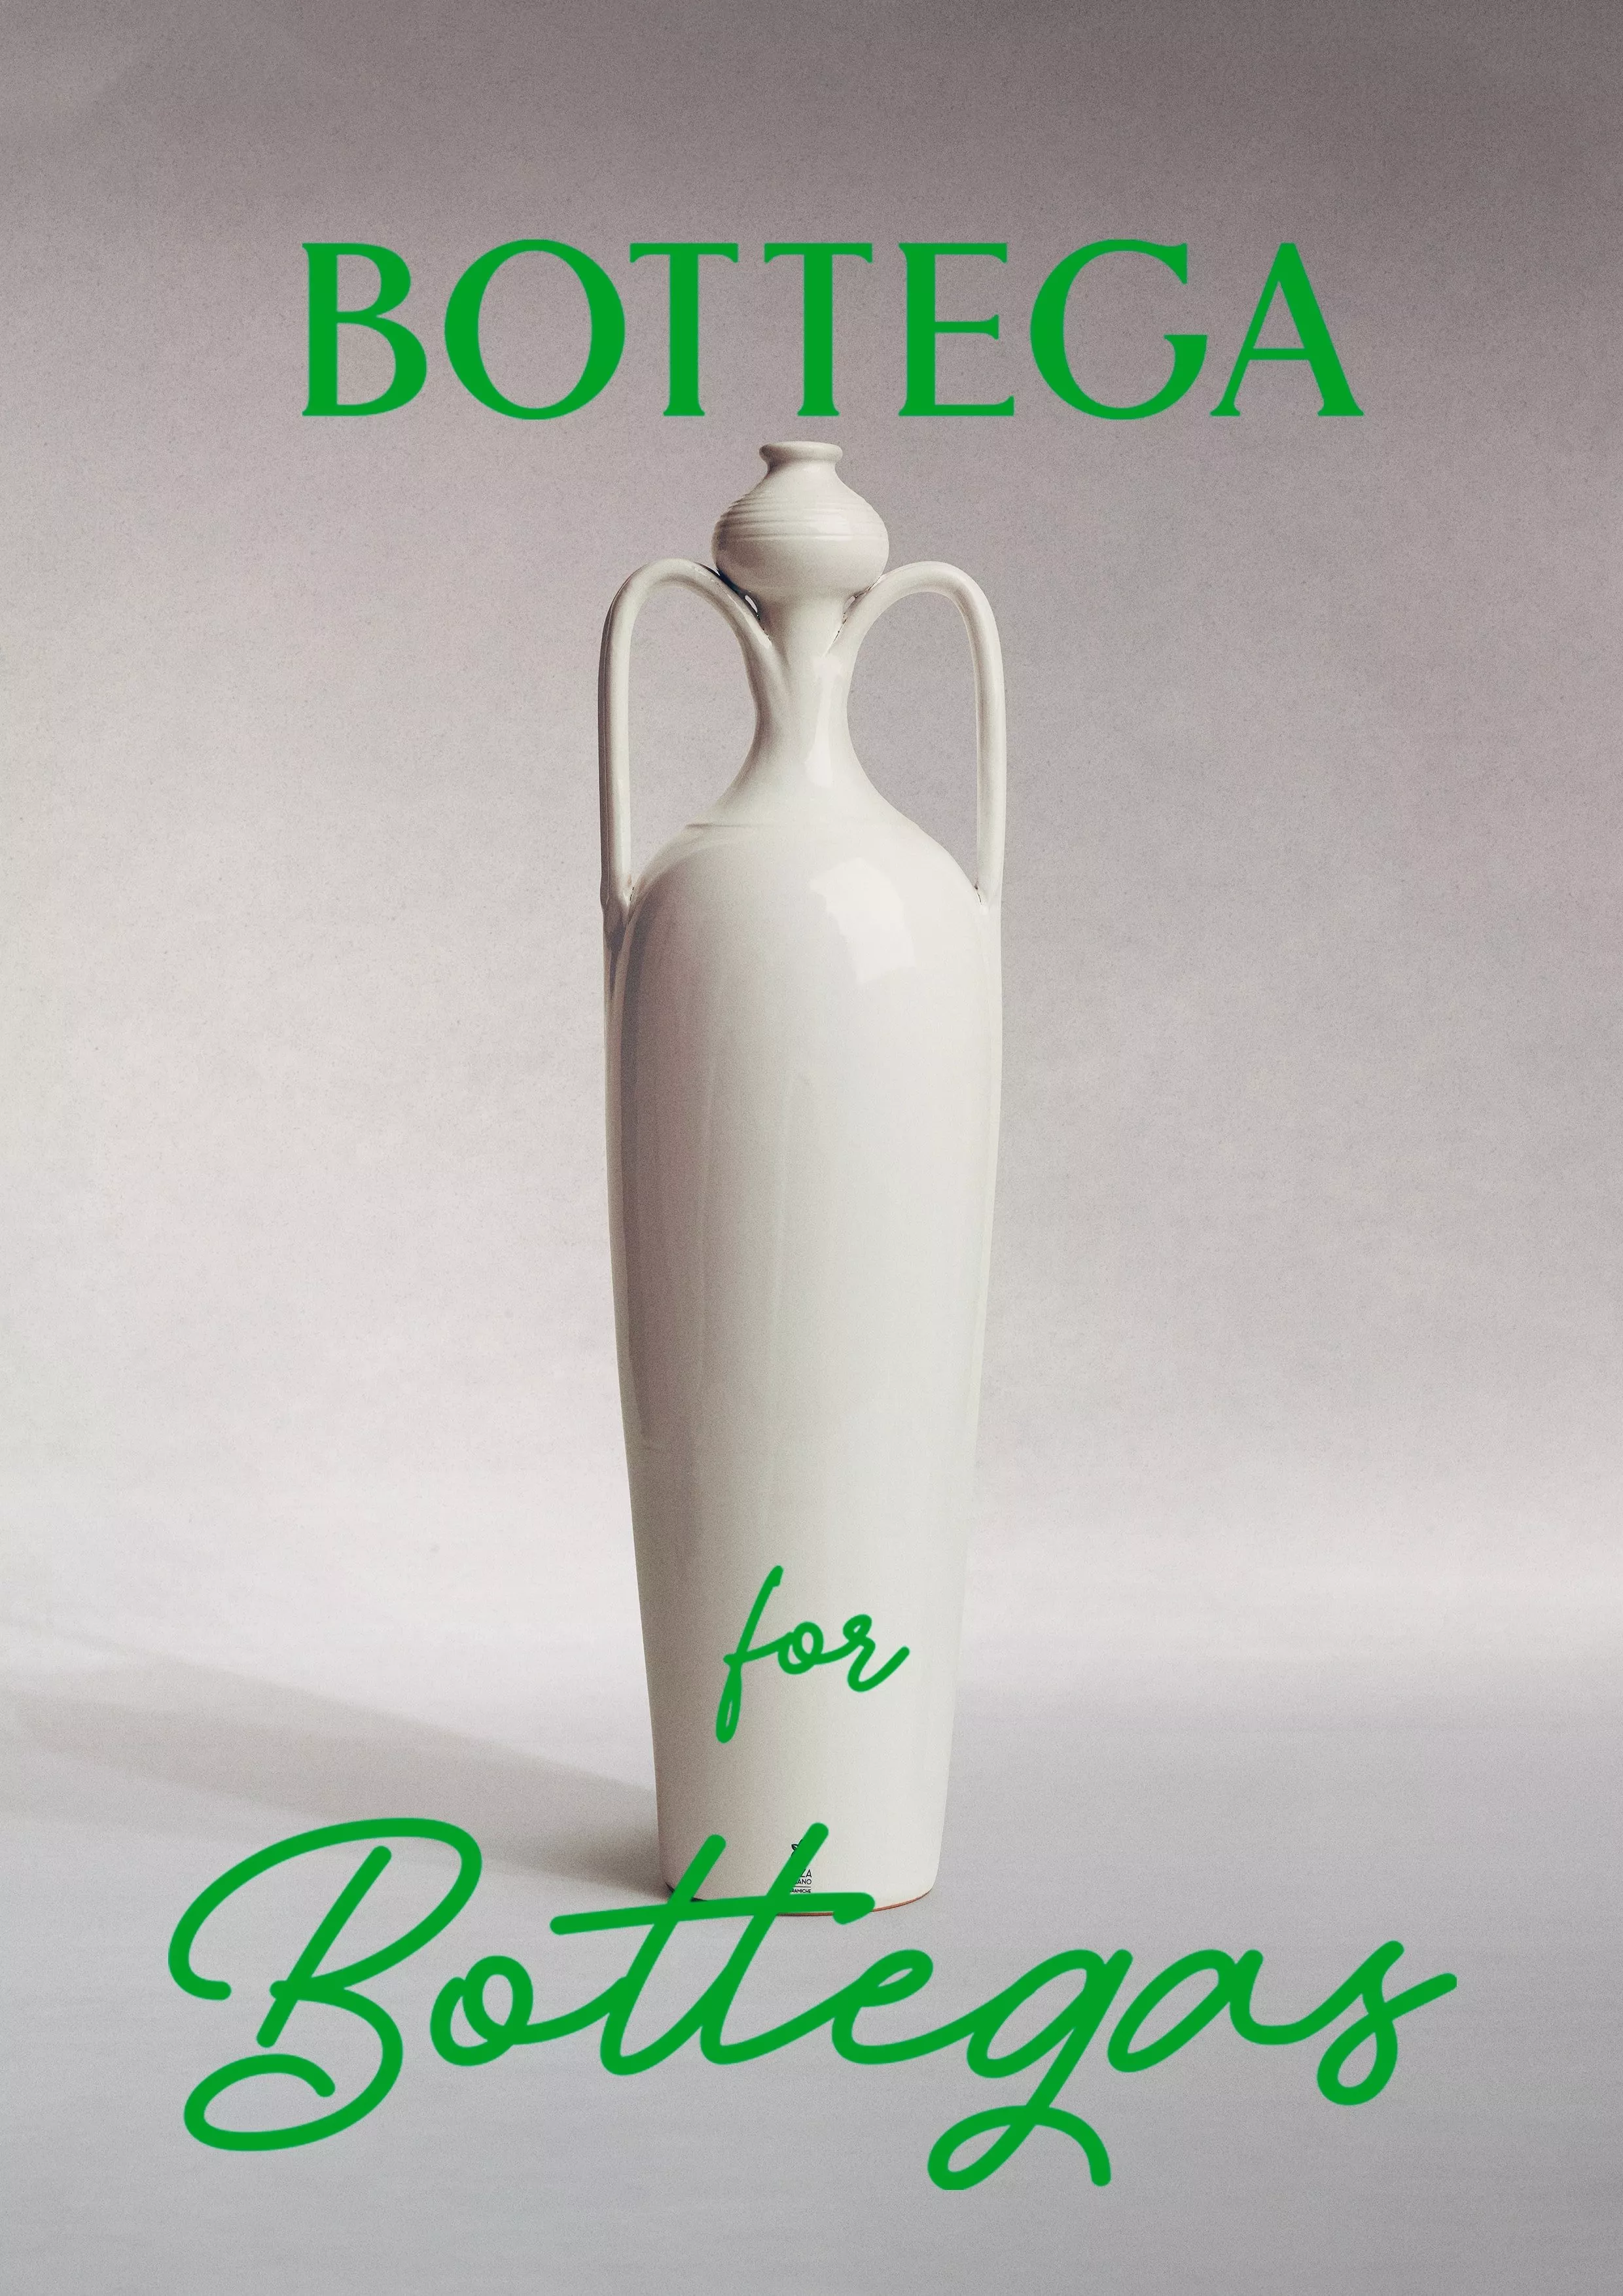 Bottega Veneta تطلق مبادرة Bottega for bottegas لدعم الإبداع الإيطالي